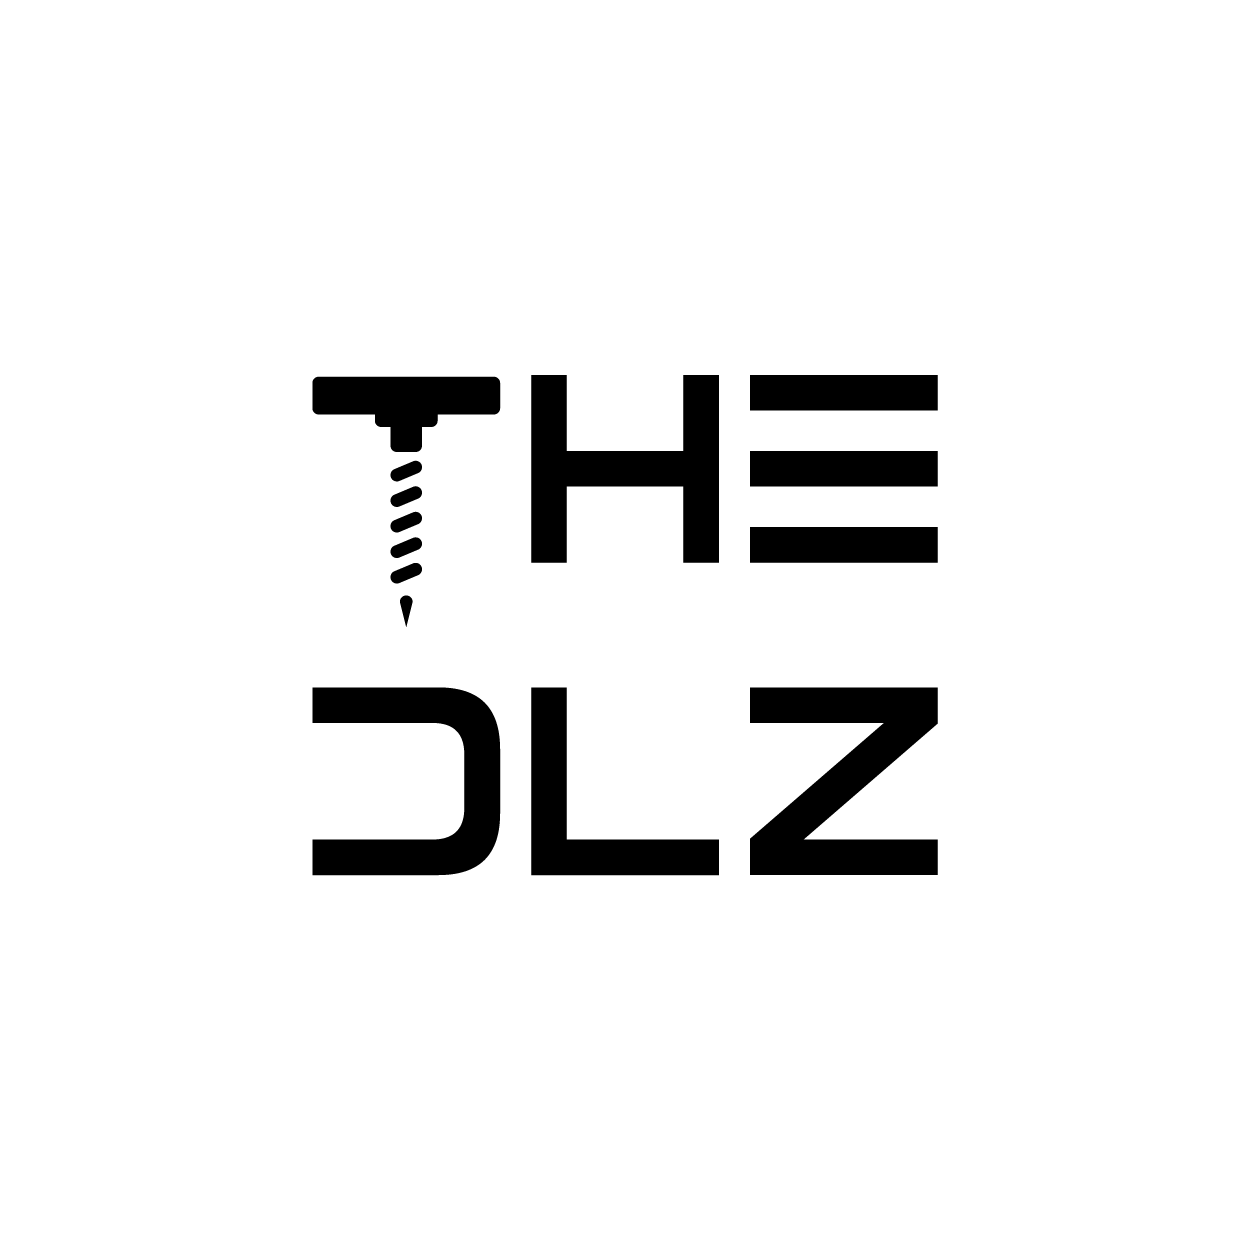 The DLZ